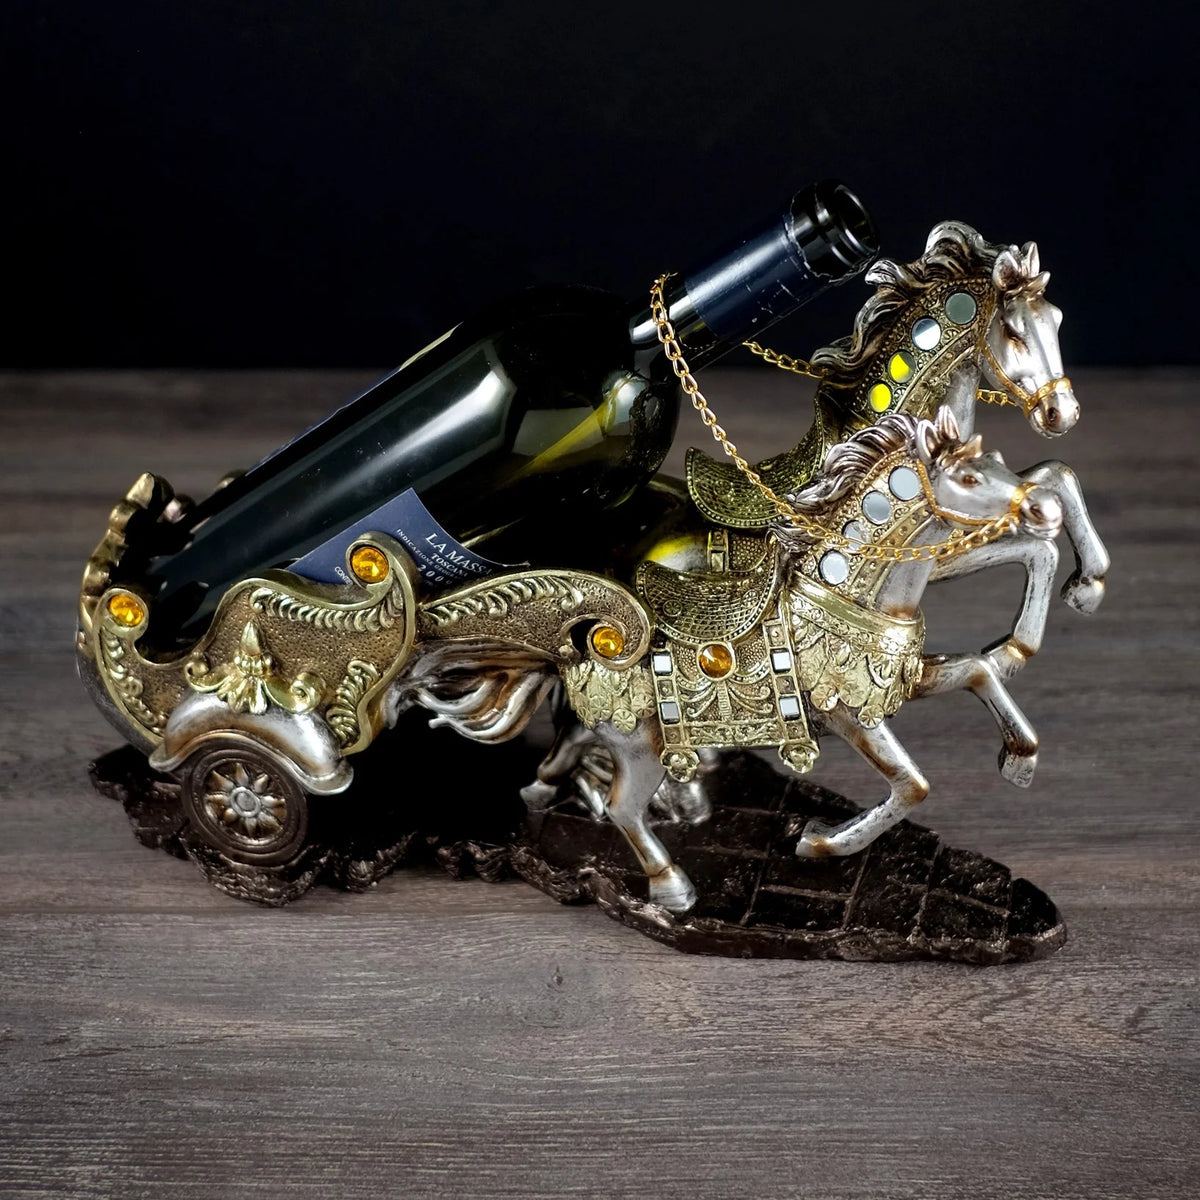 Horse & Carriage Decorative Wine Bottle Holder